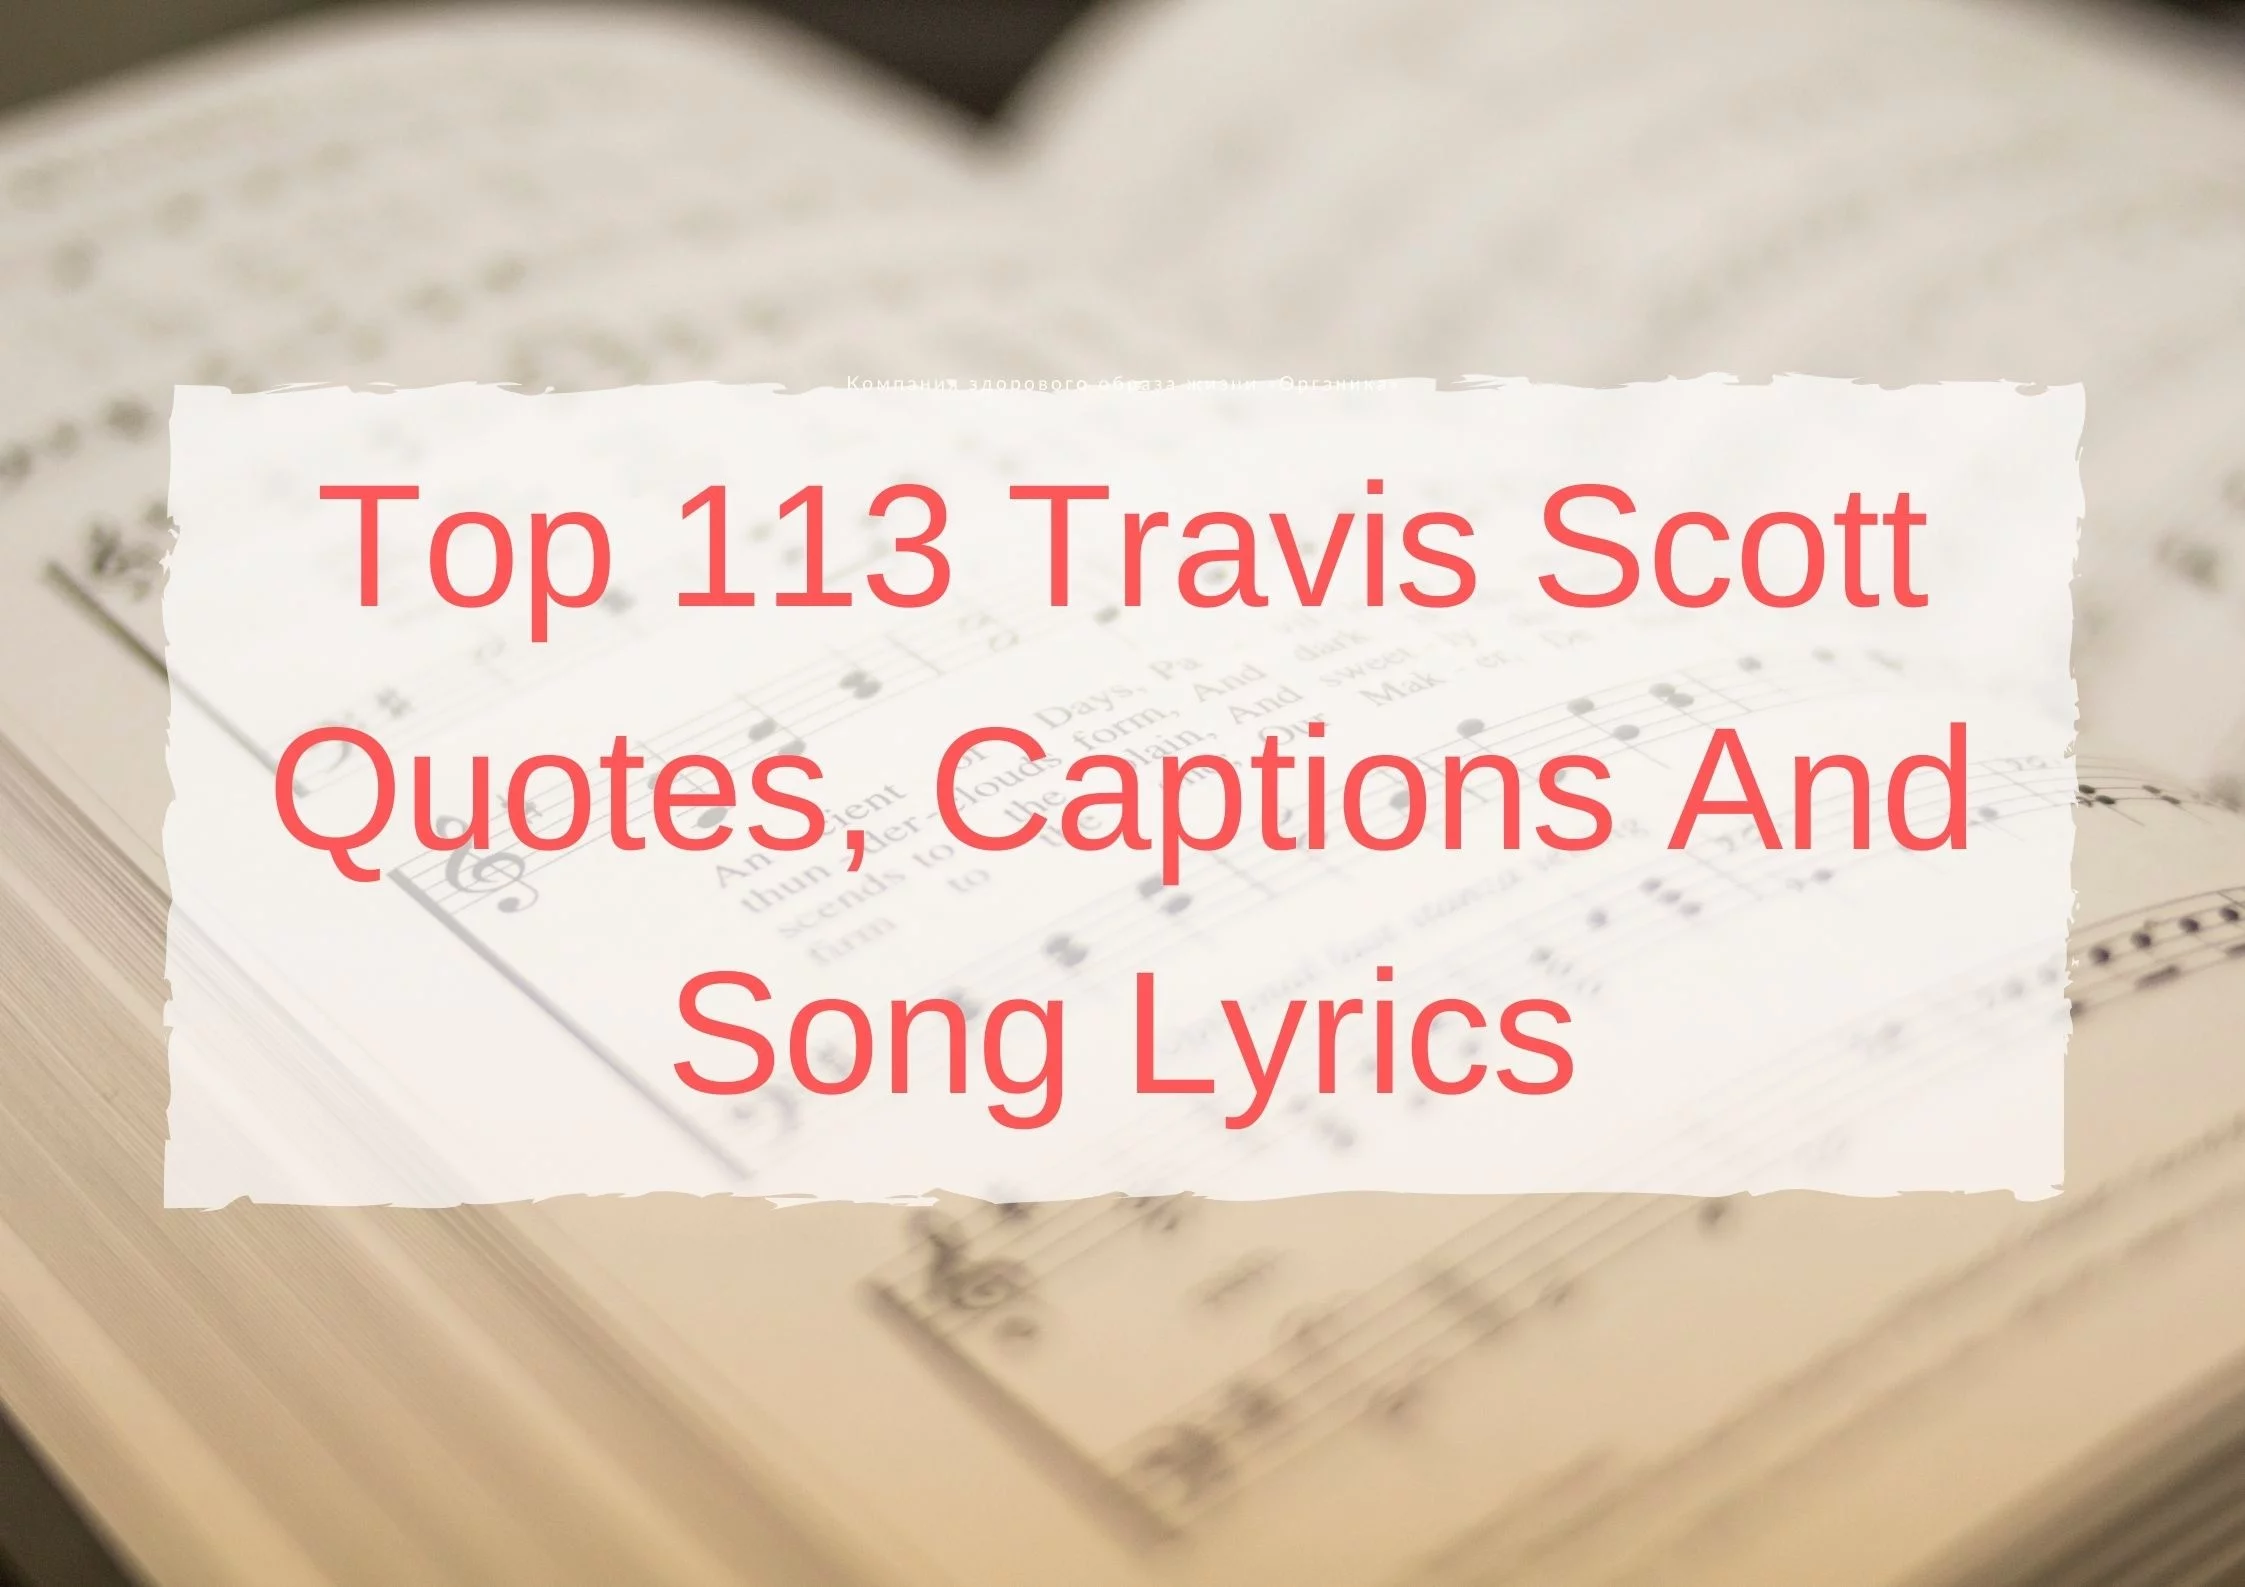 Top 113 Travis Scott Quotes, Captions And Song Lyrics